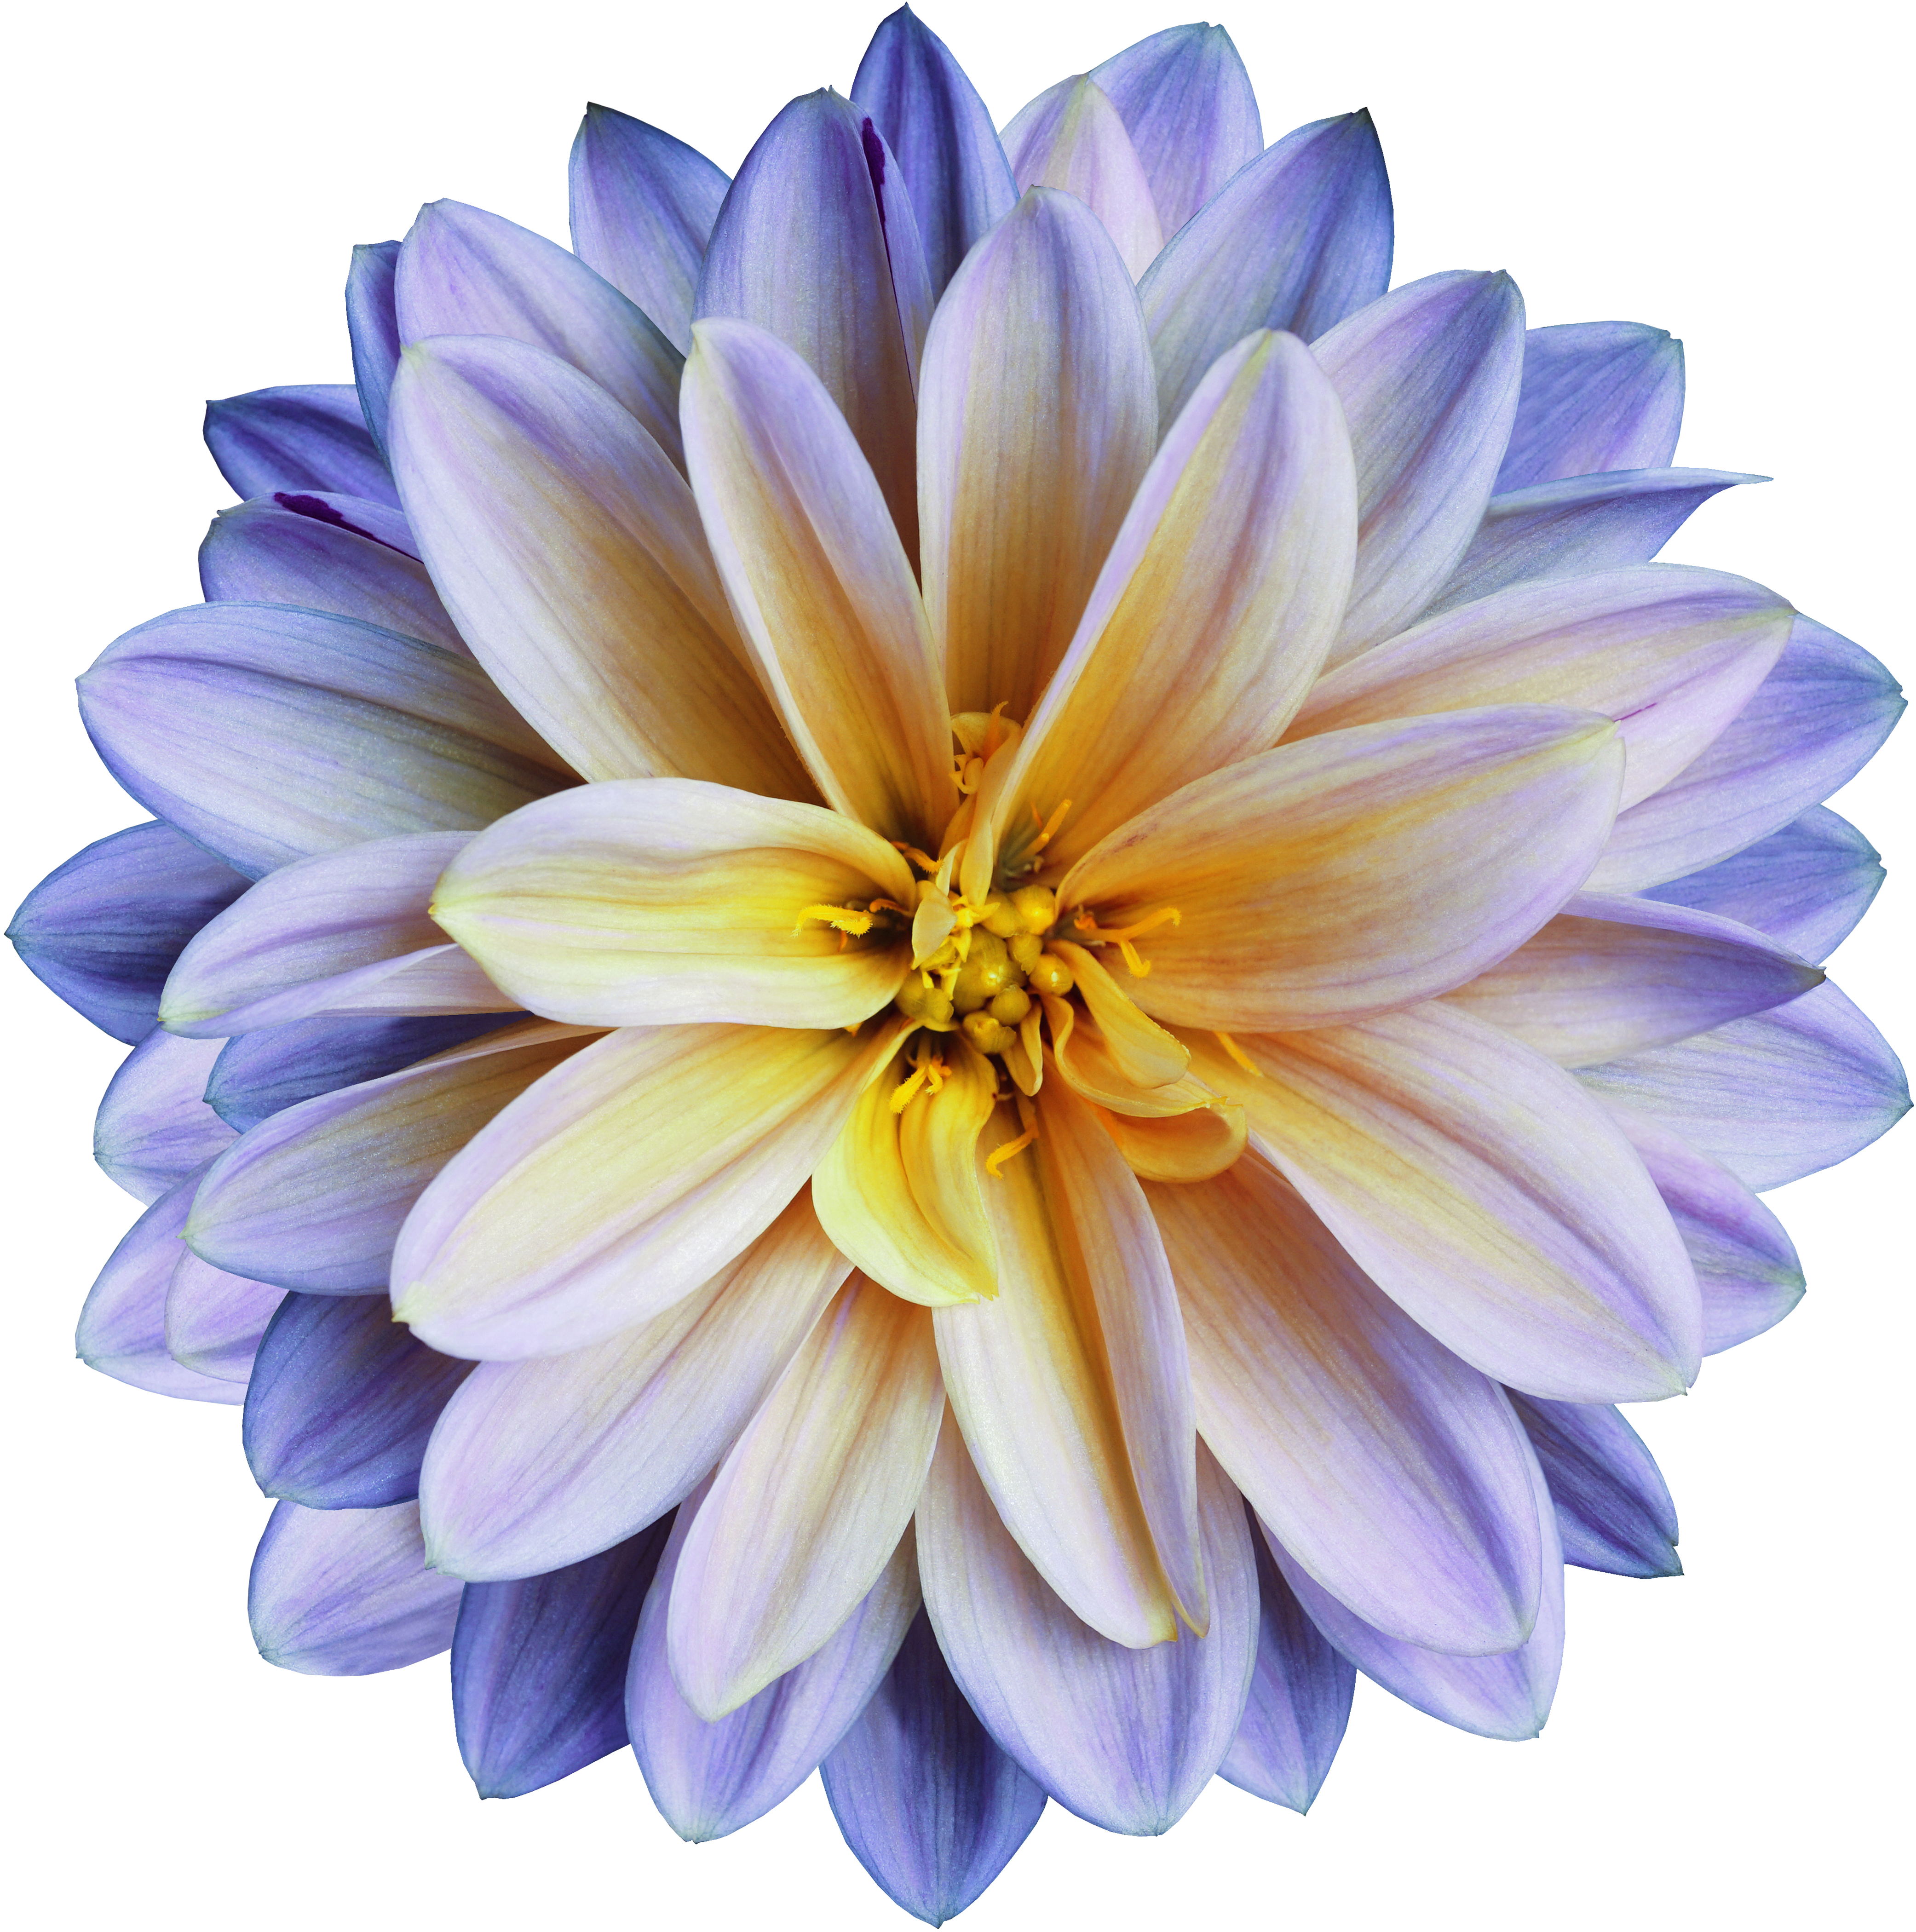 Traditional Chrysanthemum Tattoo